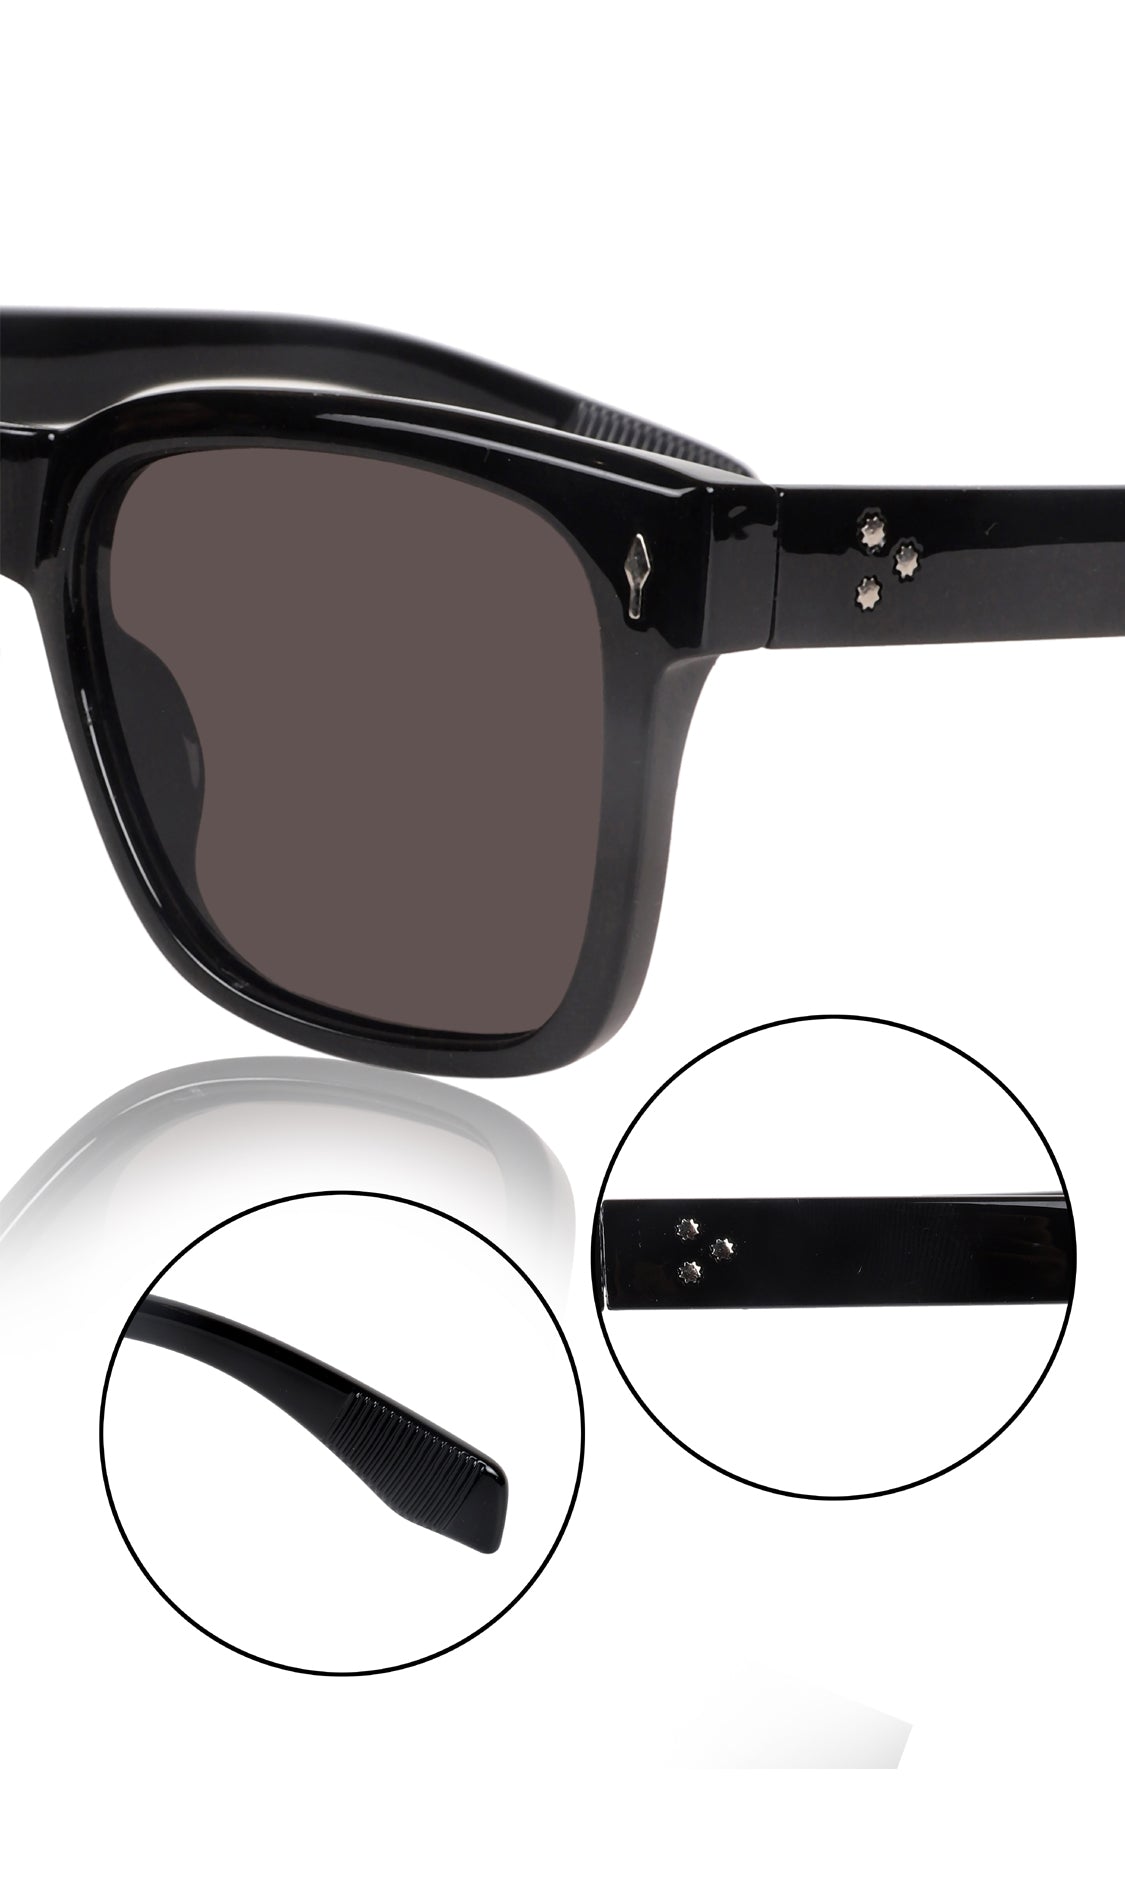 Jodykoes® Premium Series Square UV Protection Sunglasses | Fashionable Sun Shades Comfortable Eyewear Eyeglasses for Men and Women (Black) - Jodykoes ®